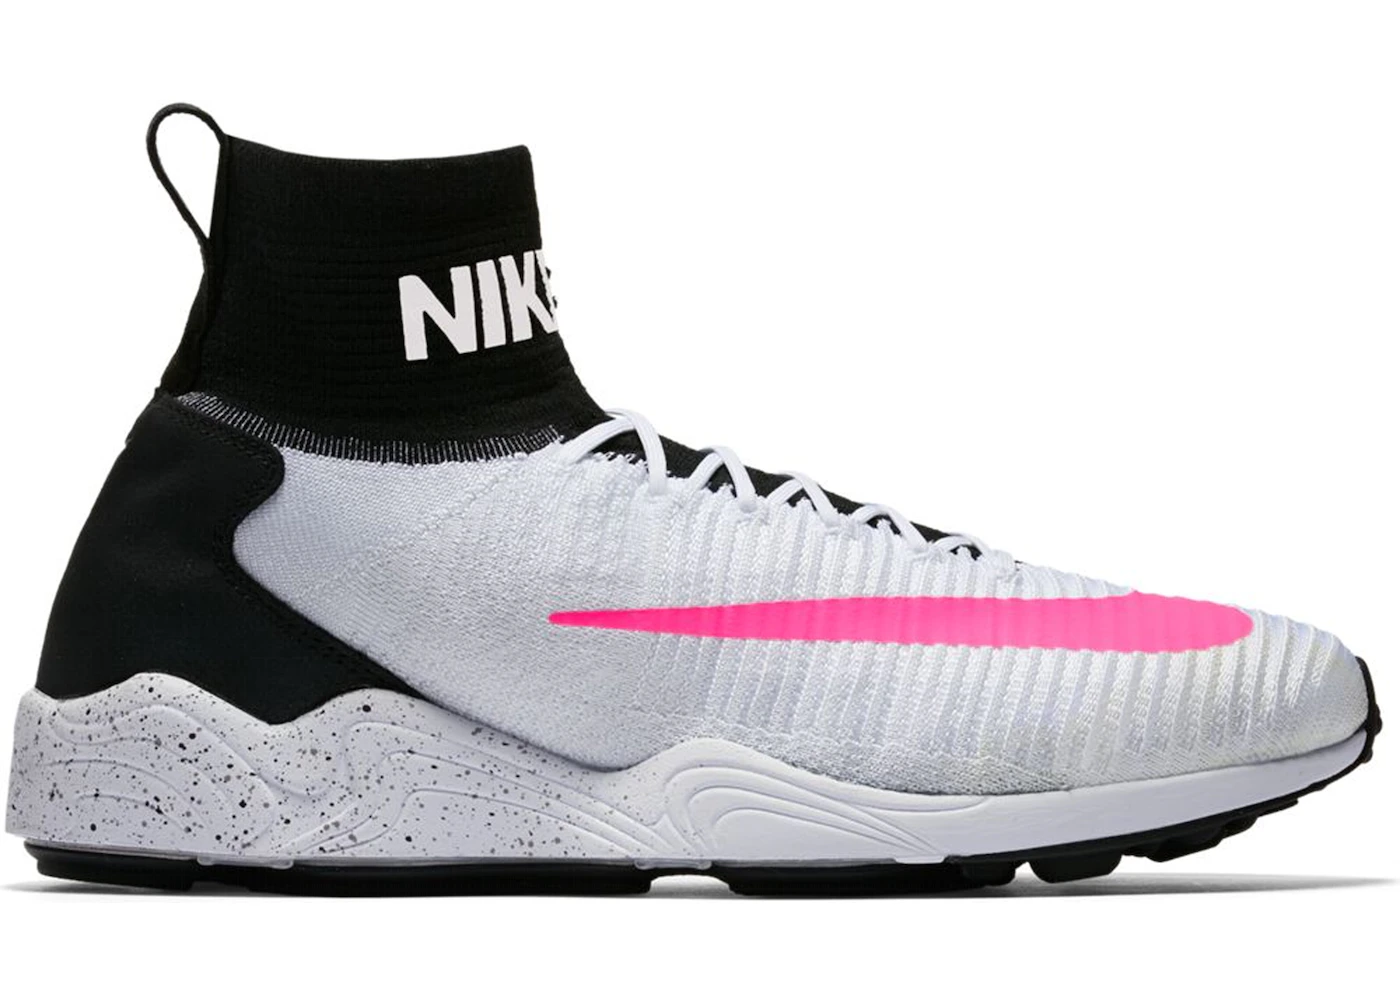 Nike Mercurial Flyknit FC White Black Pink Blast Men's - 852616 